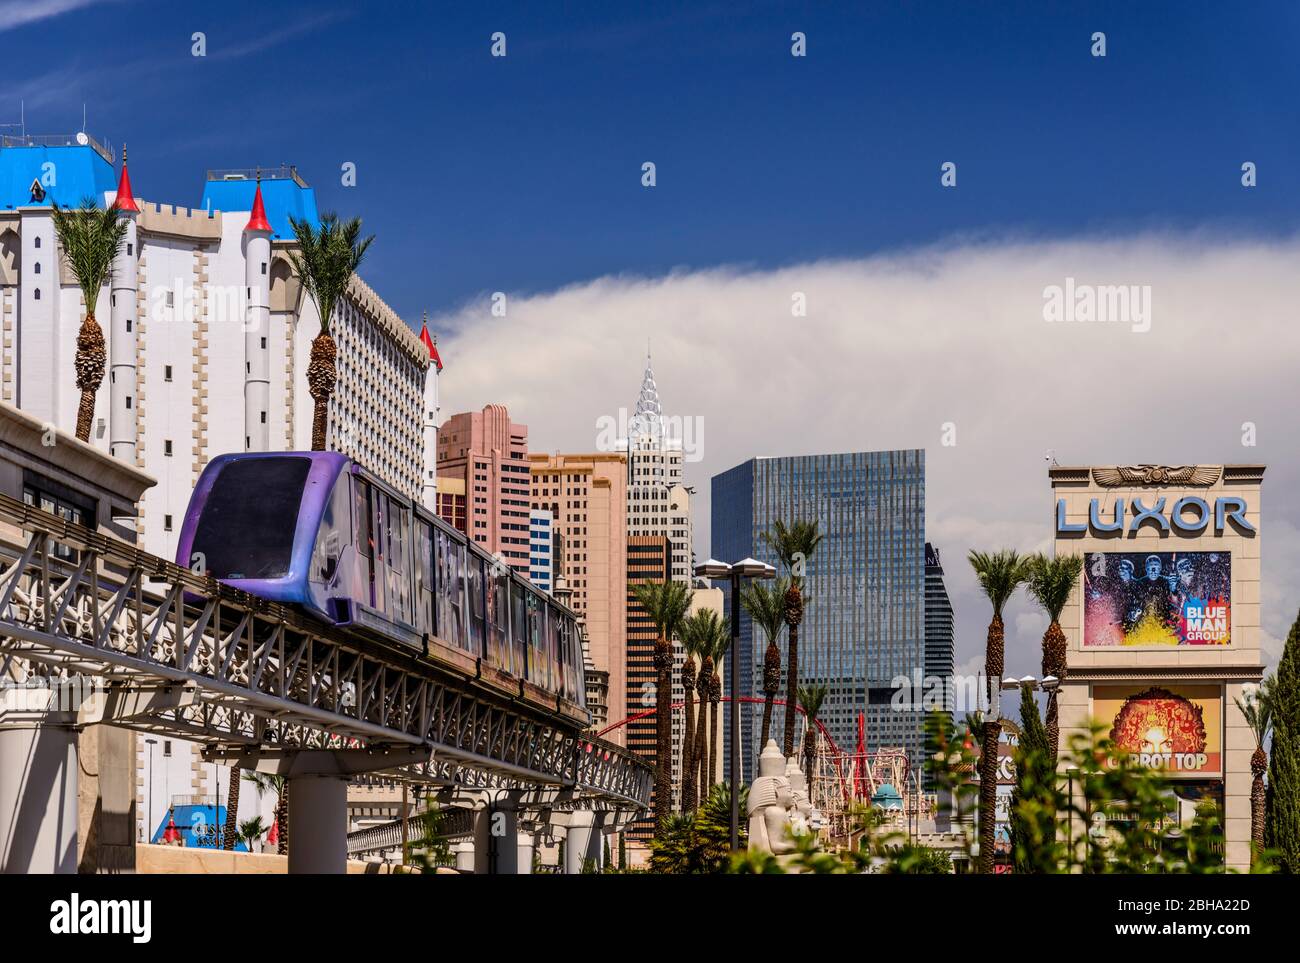 USA, Nevada, Clark County, Las Vegas, Las Vegas Boulevard, The Strip, Excalibur Hotel mit Monorail Stock Photo